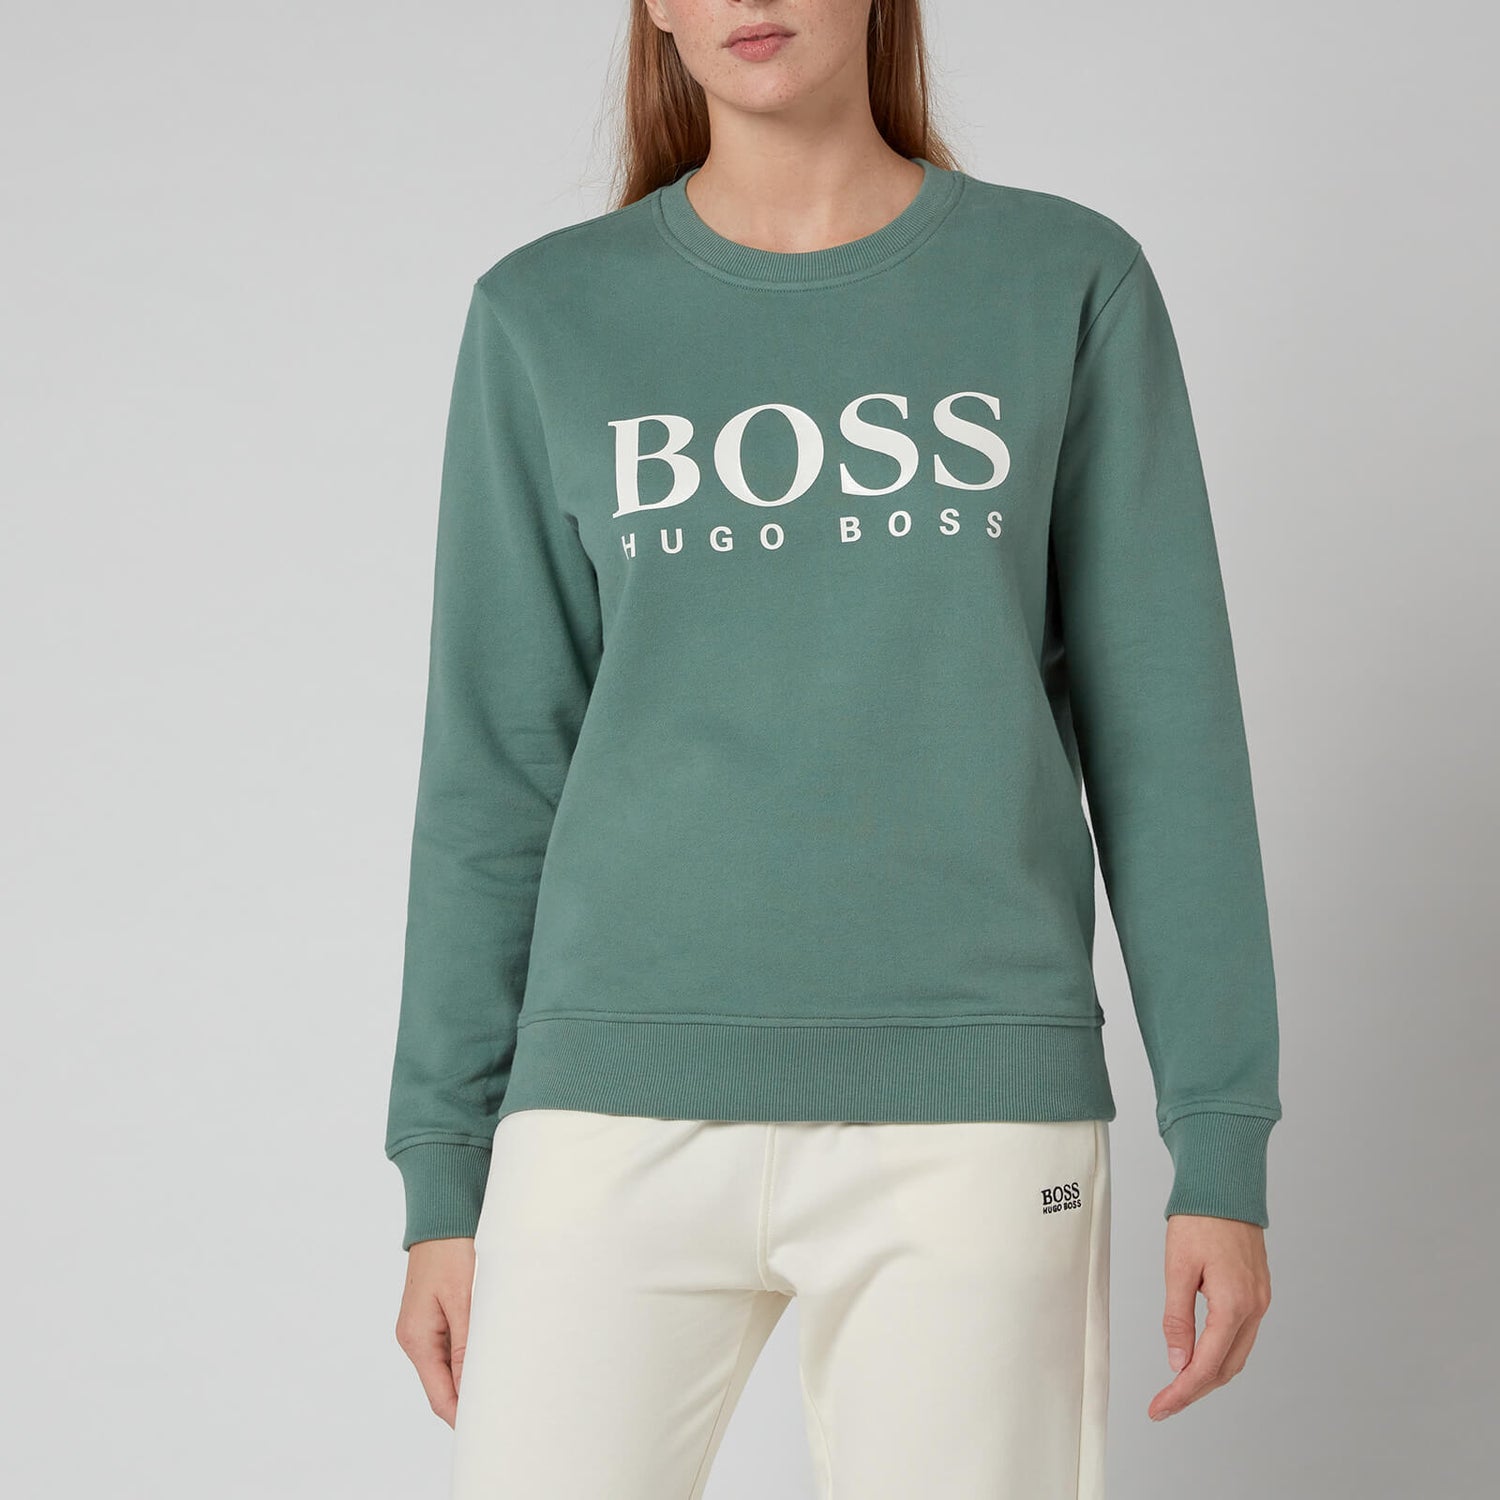 BOSS Women's Elaboss3 Sweatshirt - Light/Pastel Green